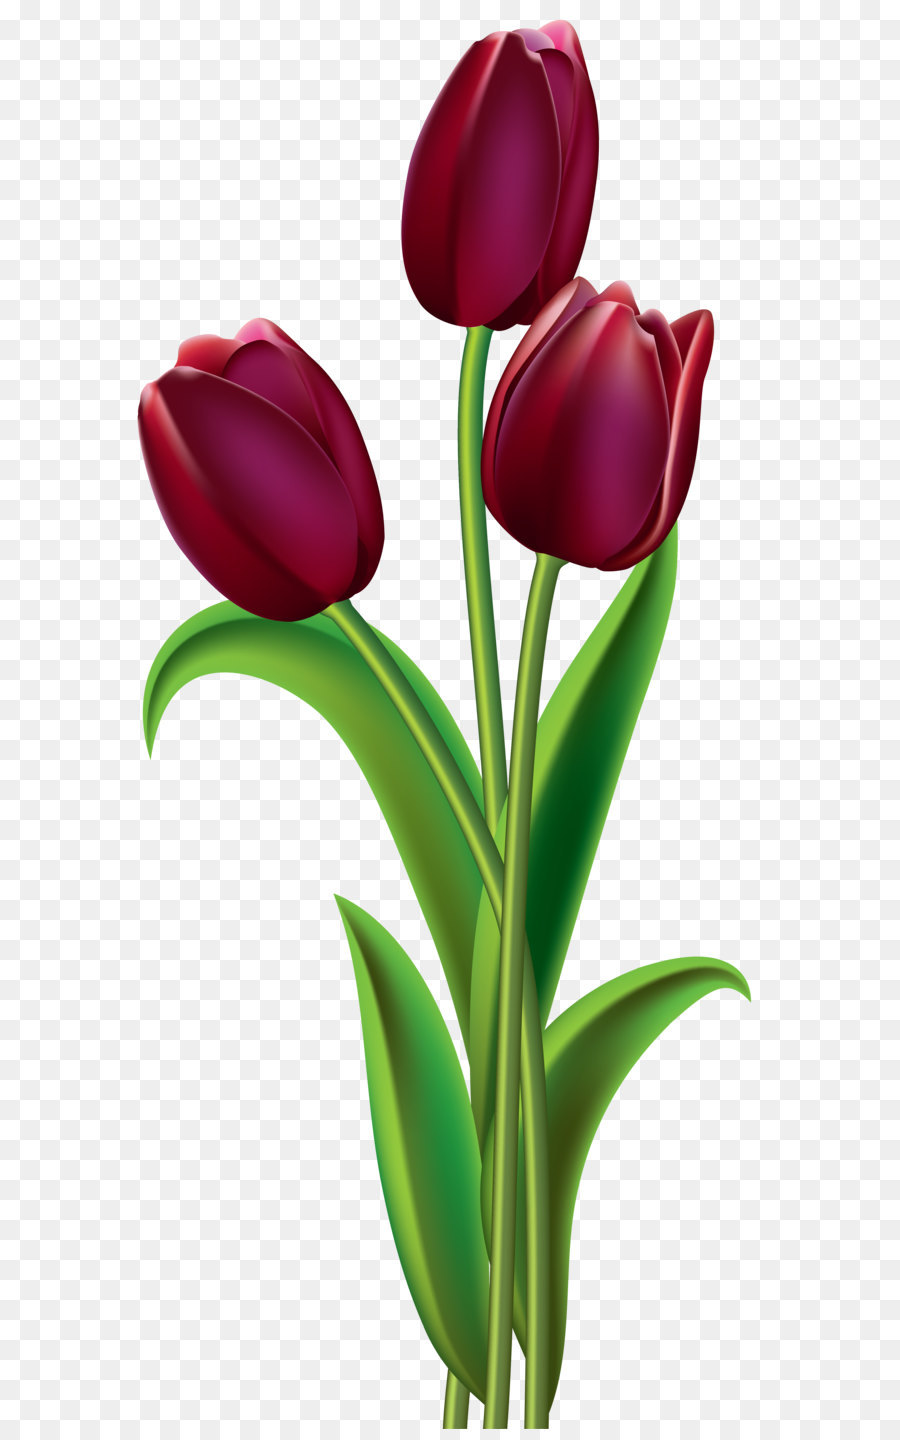 Tulip Red Flower Clip art - Red Dark Tulips PNG Clipart Image png download - 2767*6083 - Free Transparent Indira Gandhi Memorial Tulip Garden png Download.